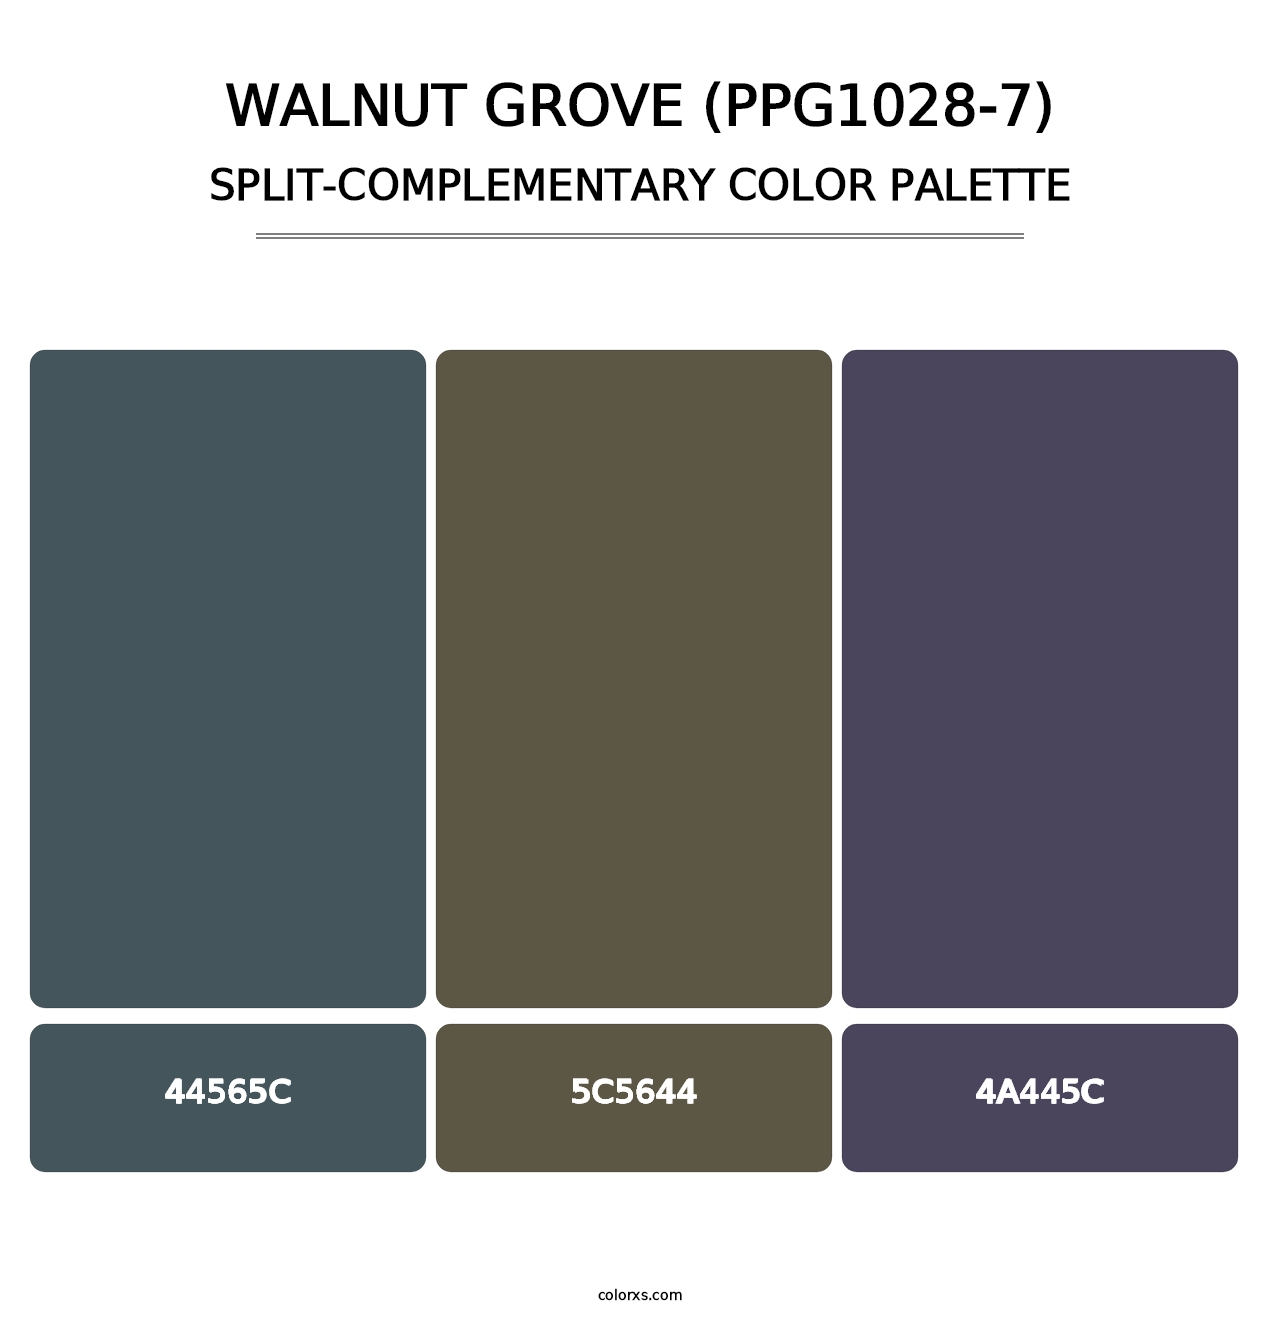 Walnut Grove (PPG1028-7) - Split-Complementary Color Palette